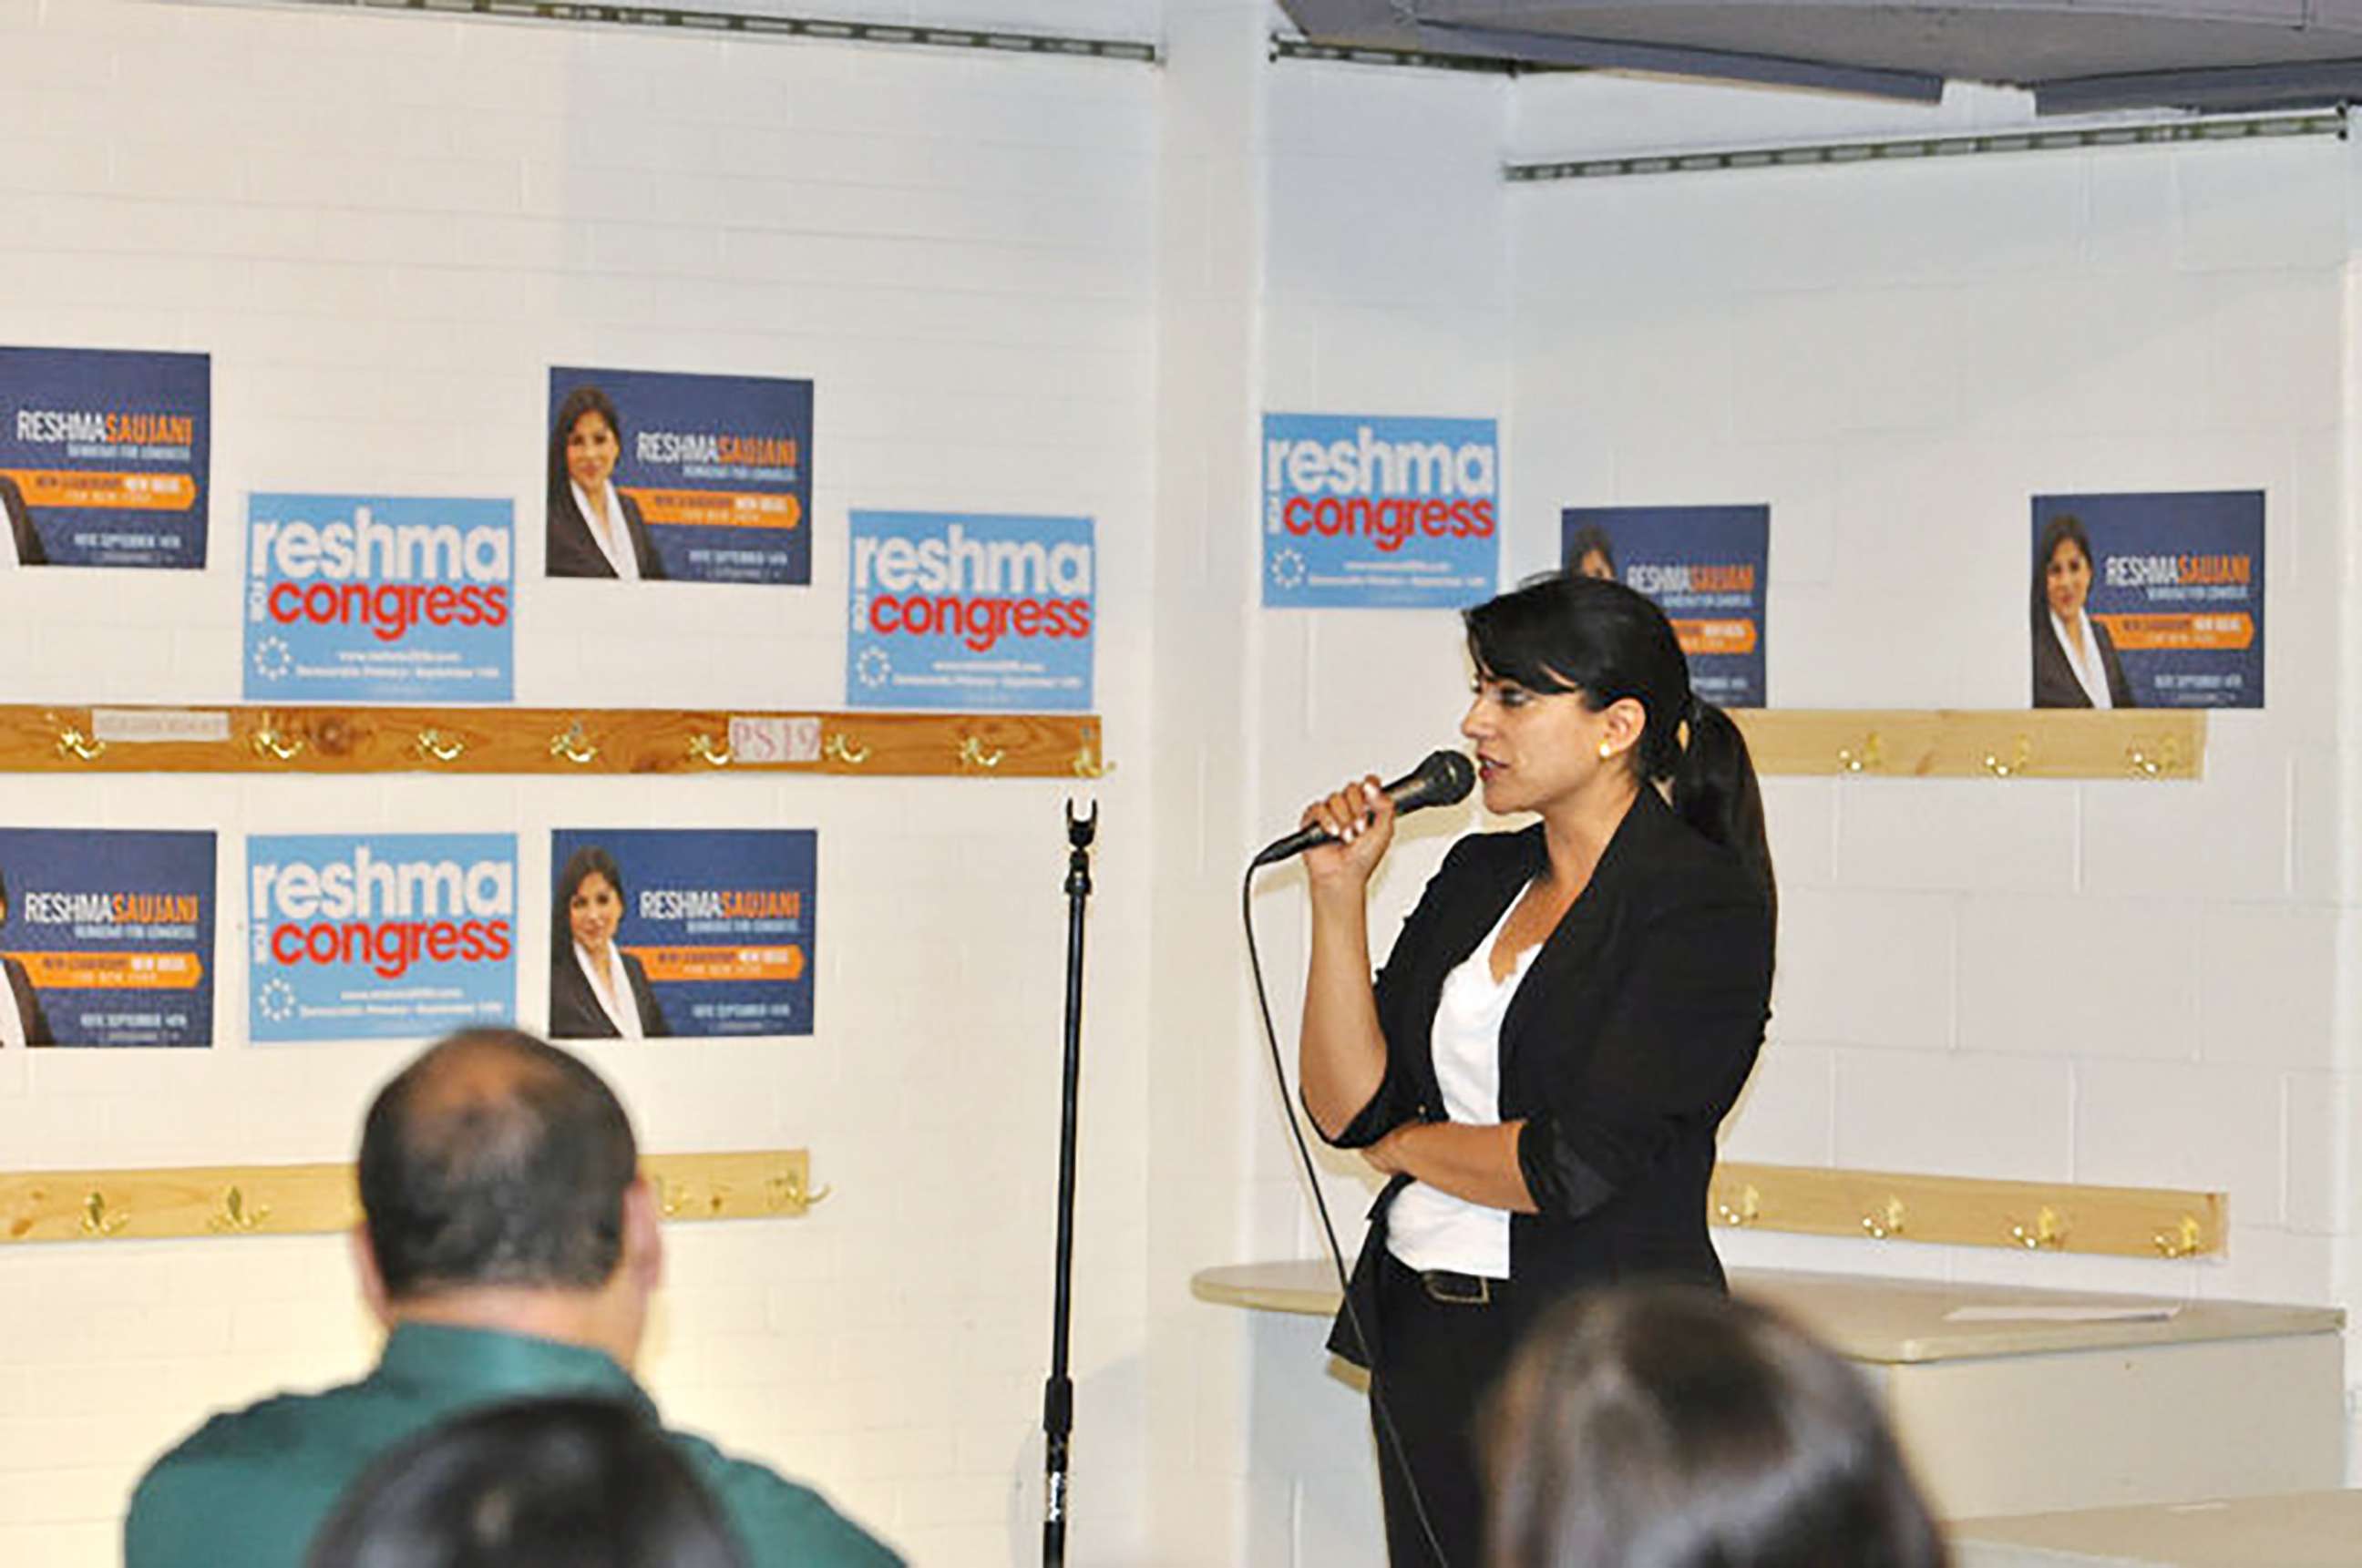 PHOTO: In 2010, Reshma Saujani ran for U.S. Congress, but lost the race.